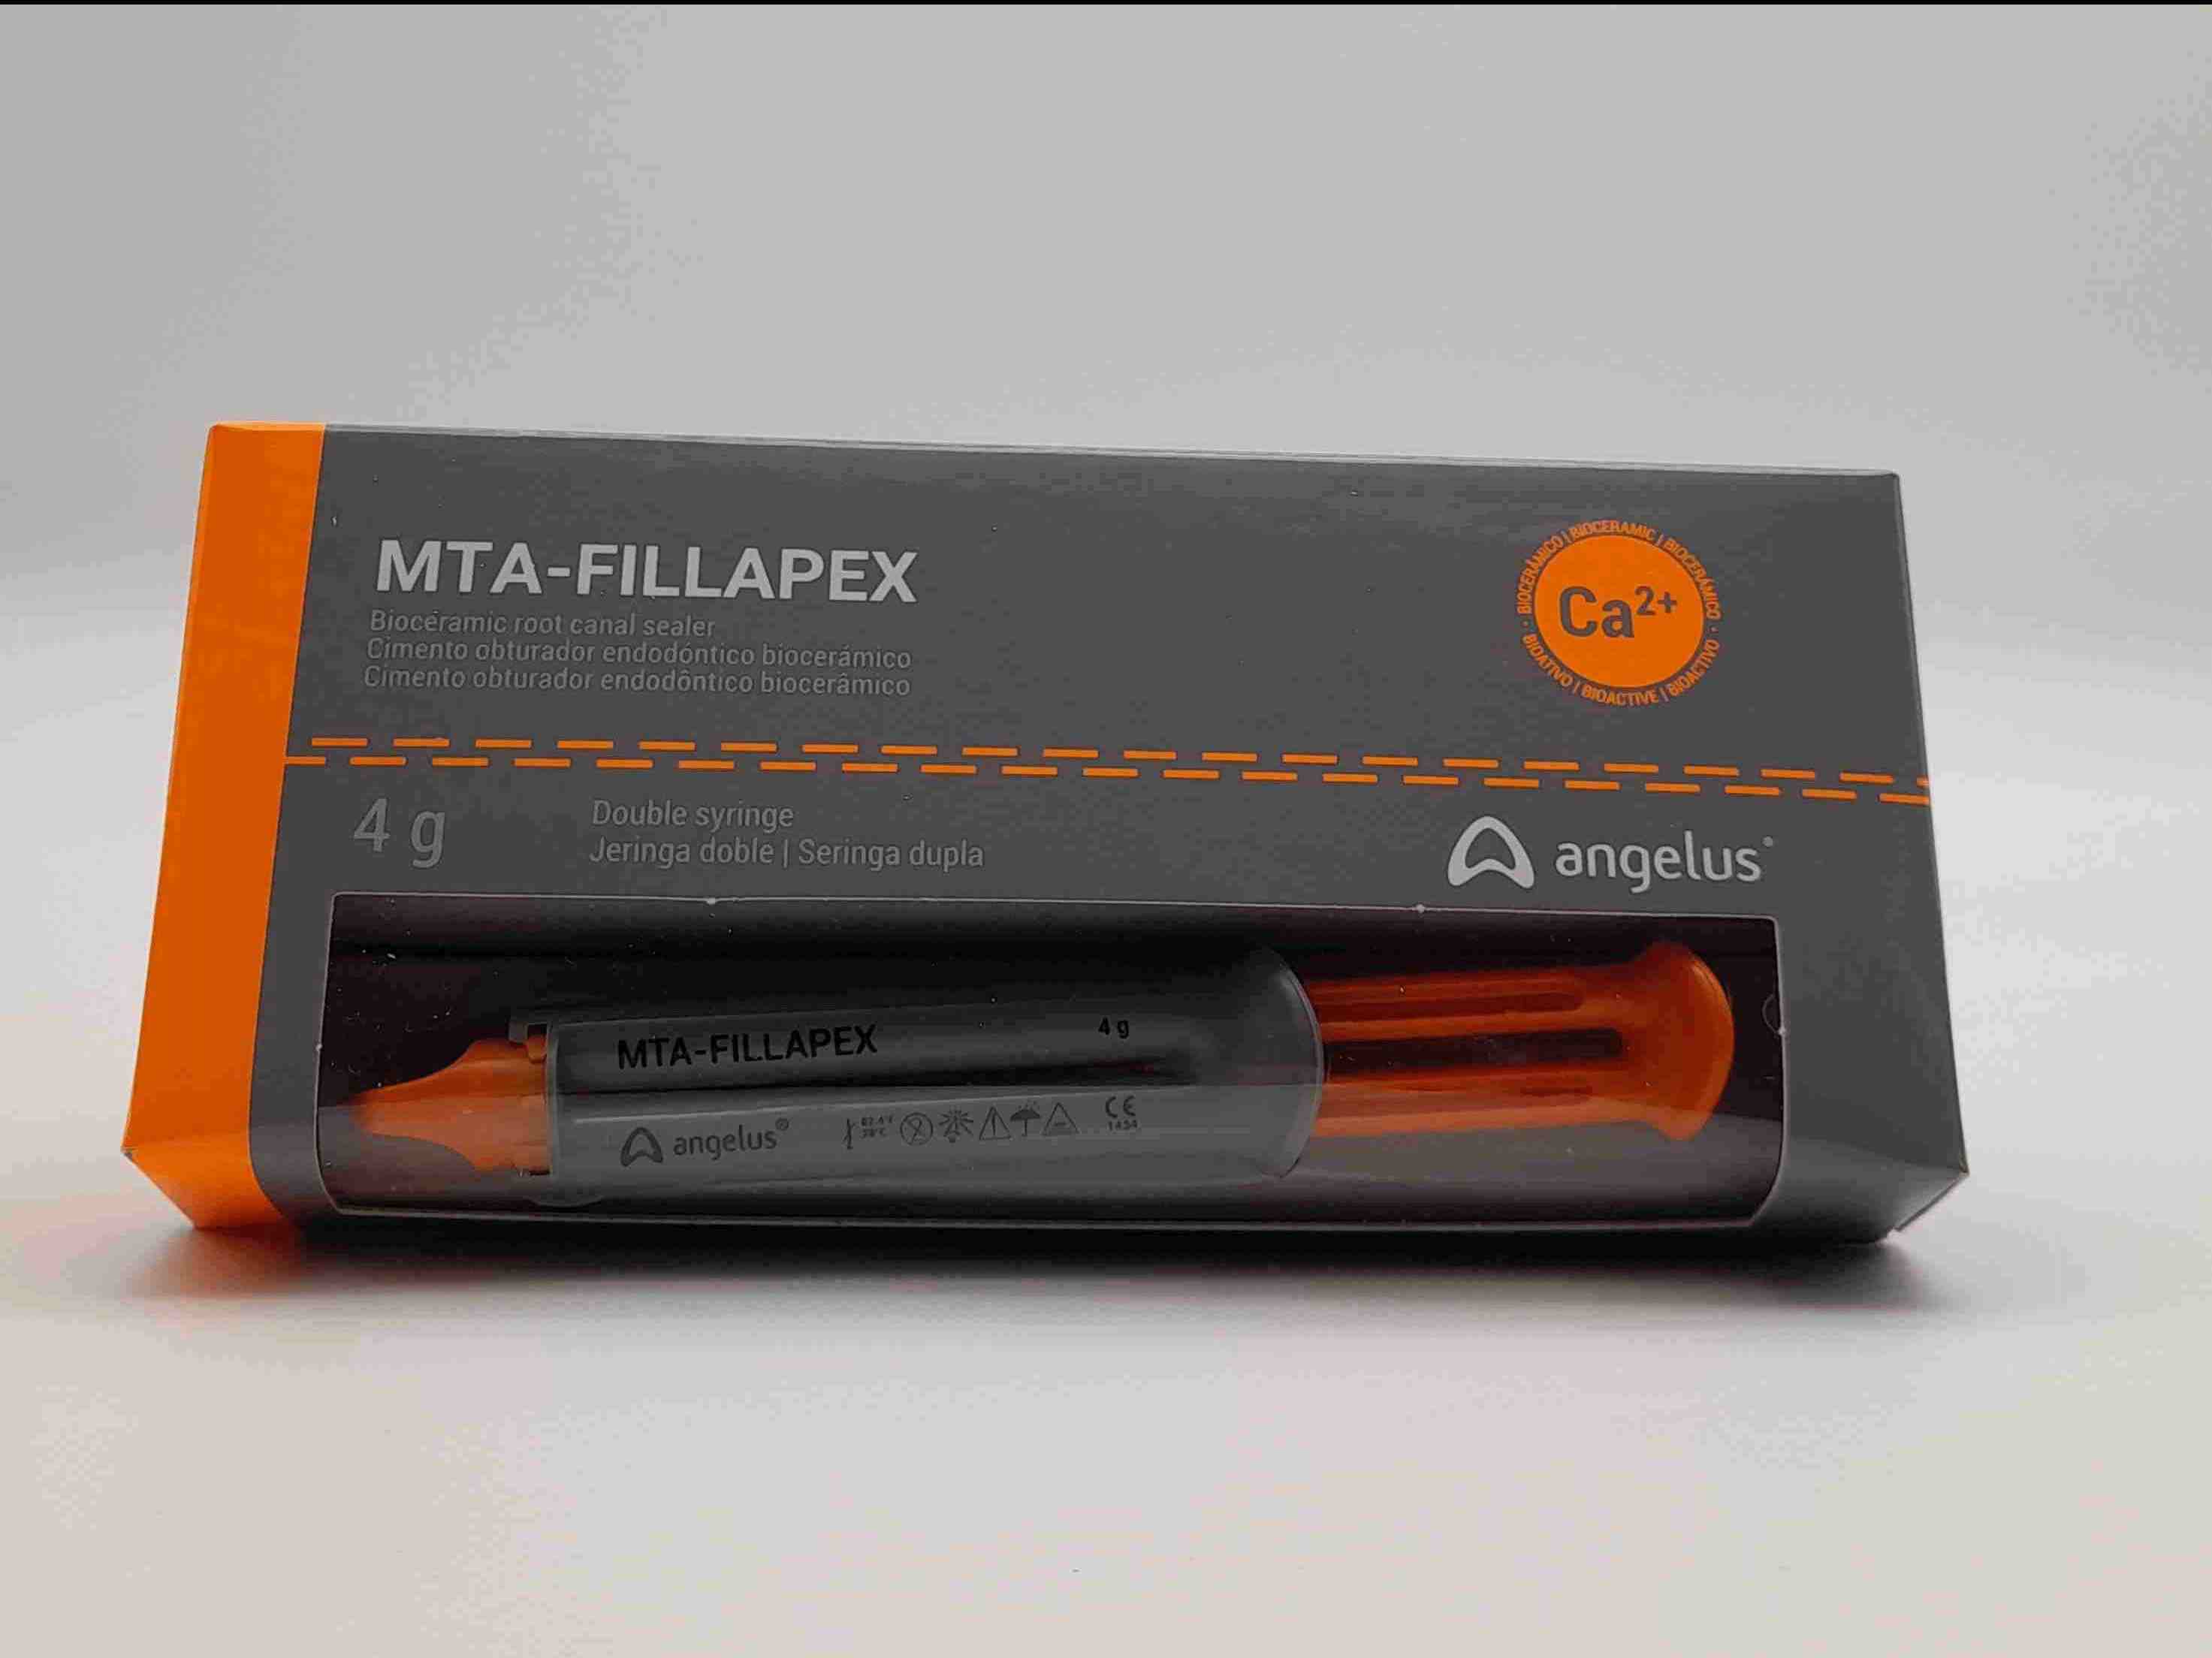 MTA-FILLAPEX